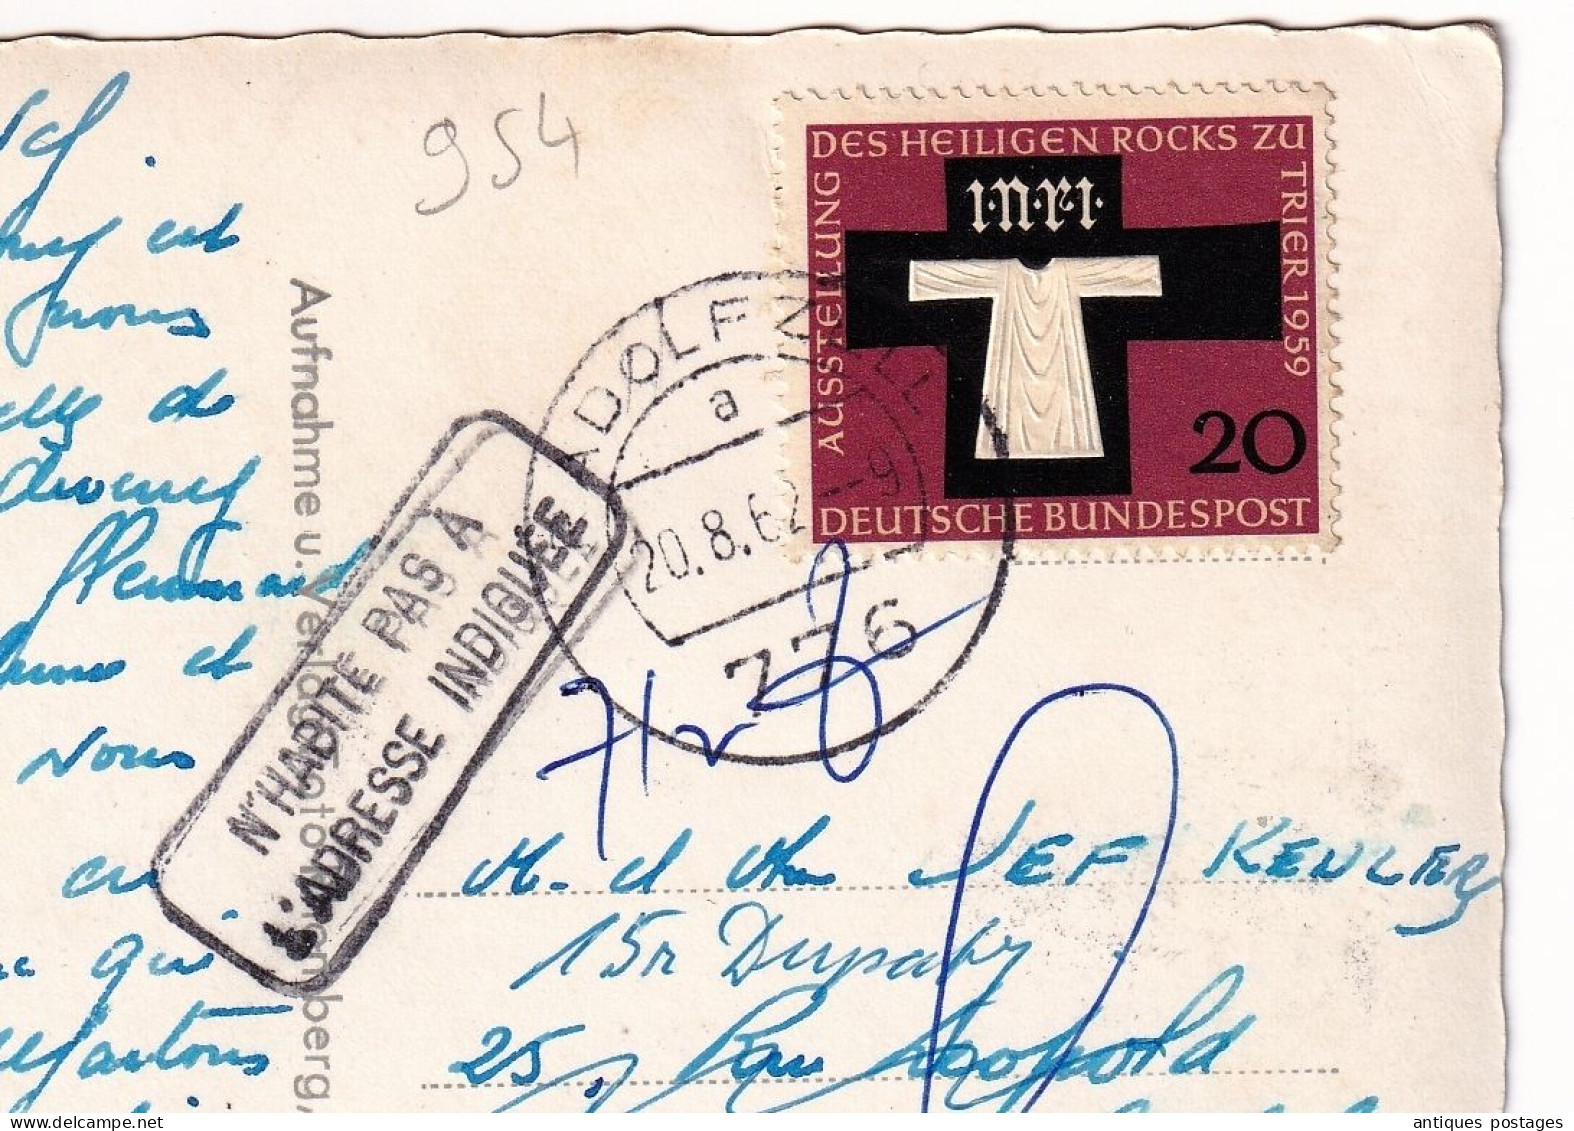 Deutschland 1962 Radolfzell Luxembourg N'Habite Pas à L'Adresse Indiquée Redirigée Sur Bordeaux Gironde - Briefe U. Dokumente